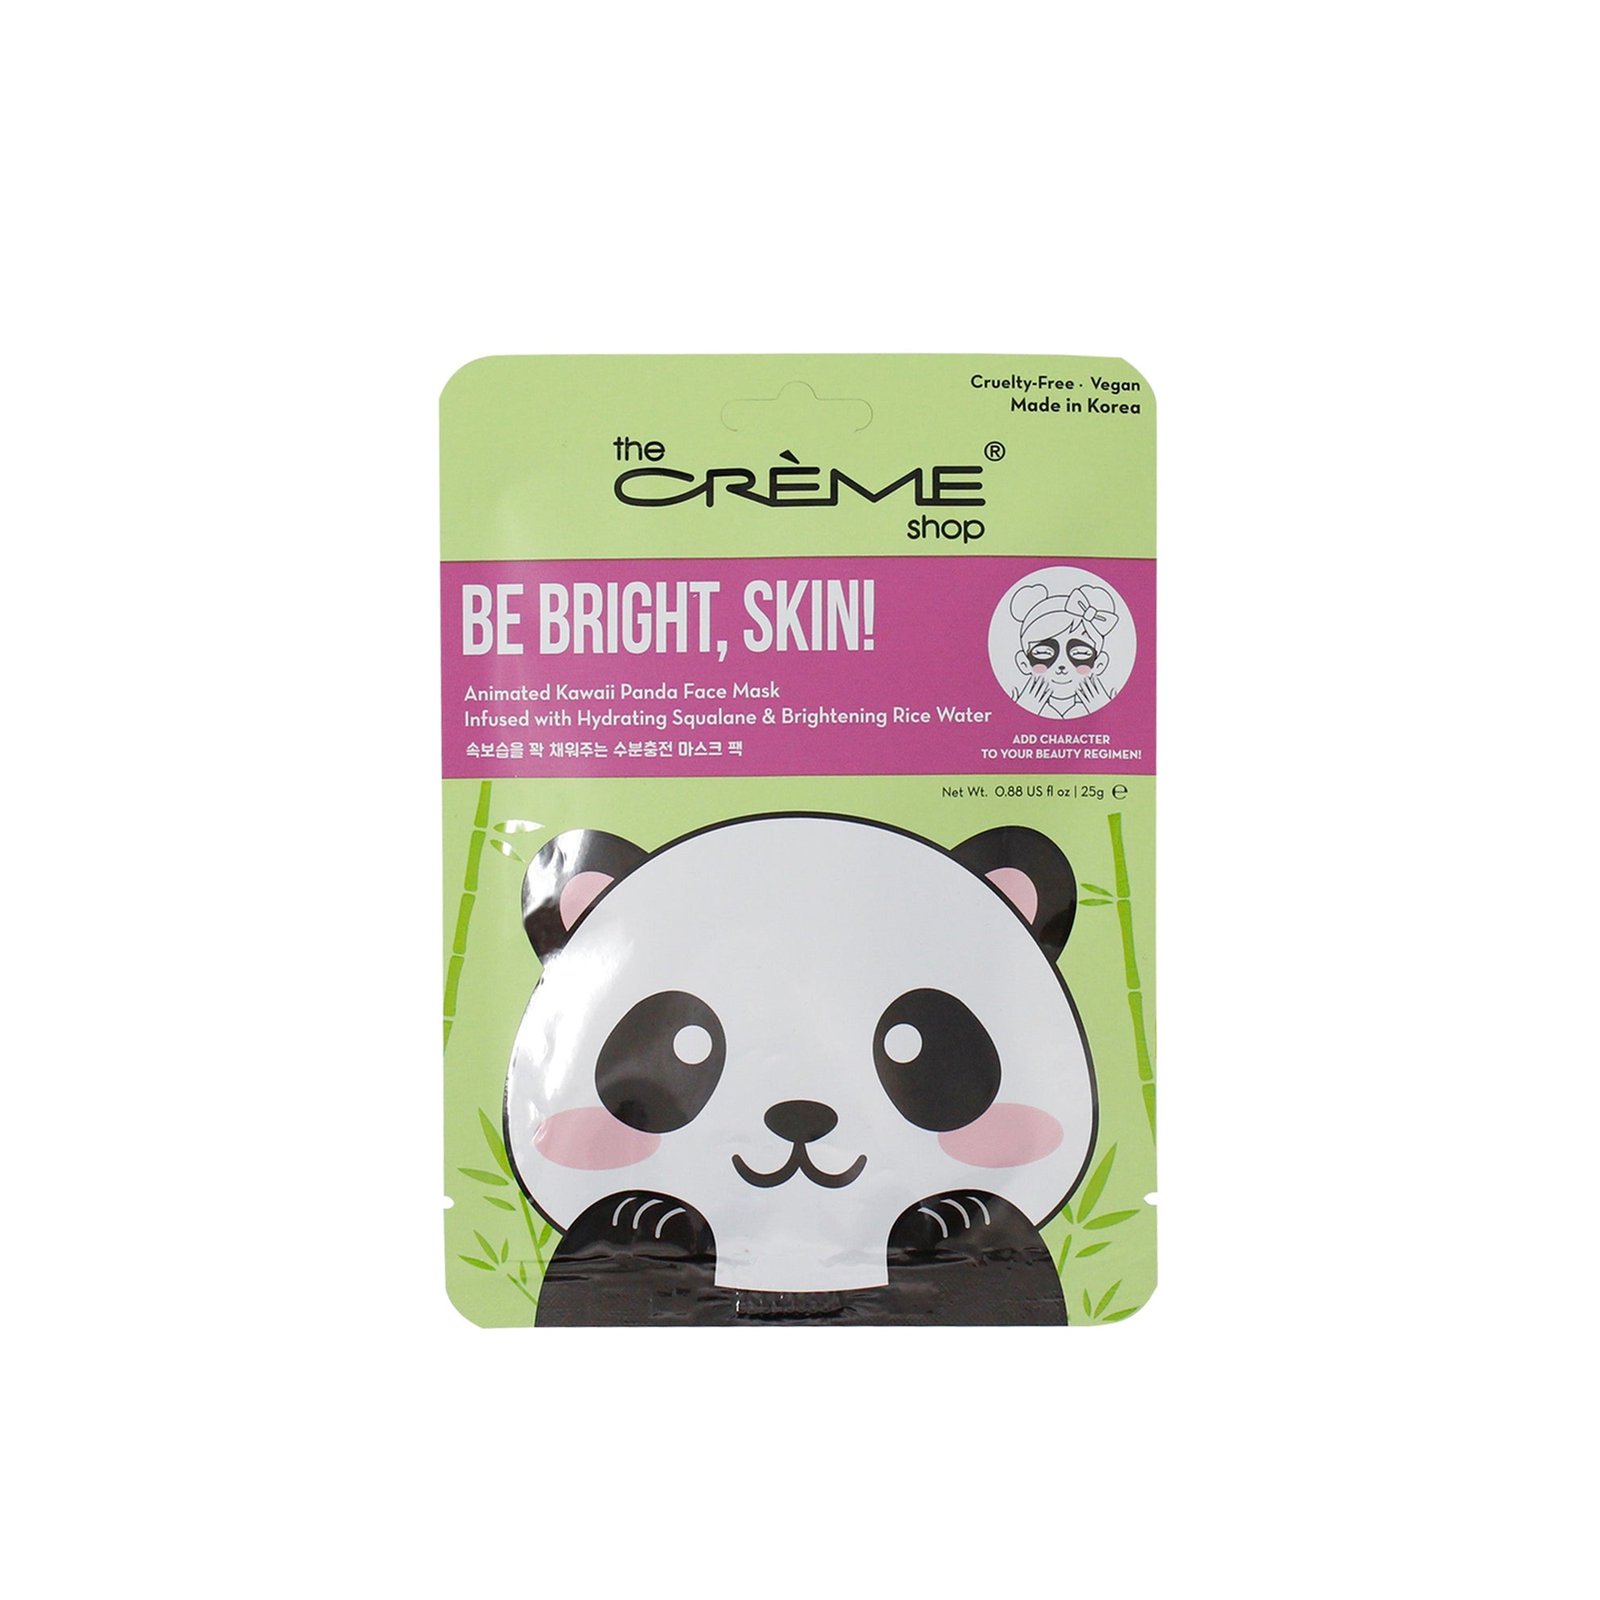 The Crème Shop Be Bright, Skin! Animated Kawaii Panda Face Mask 25g (0.88 oz)